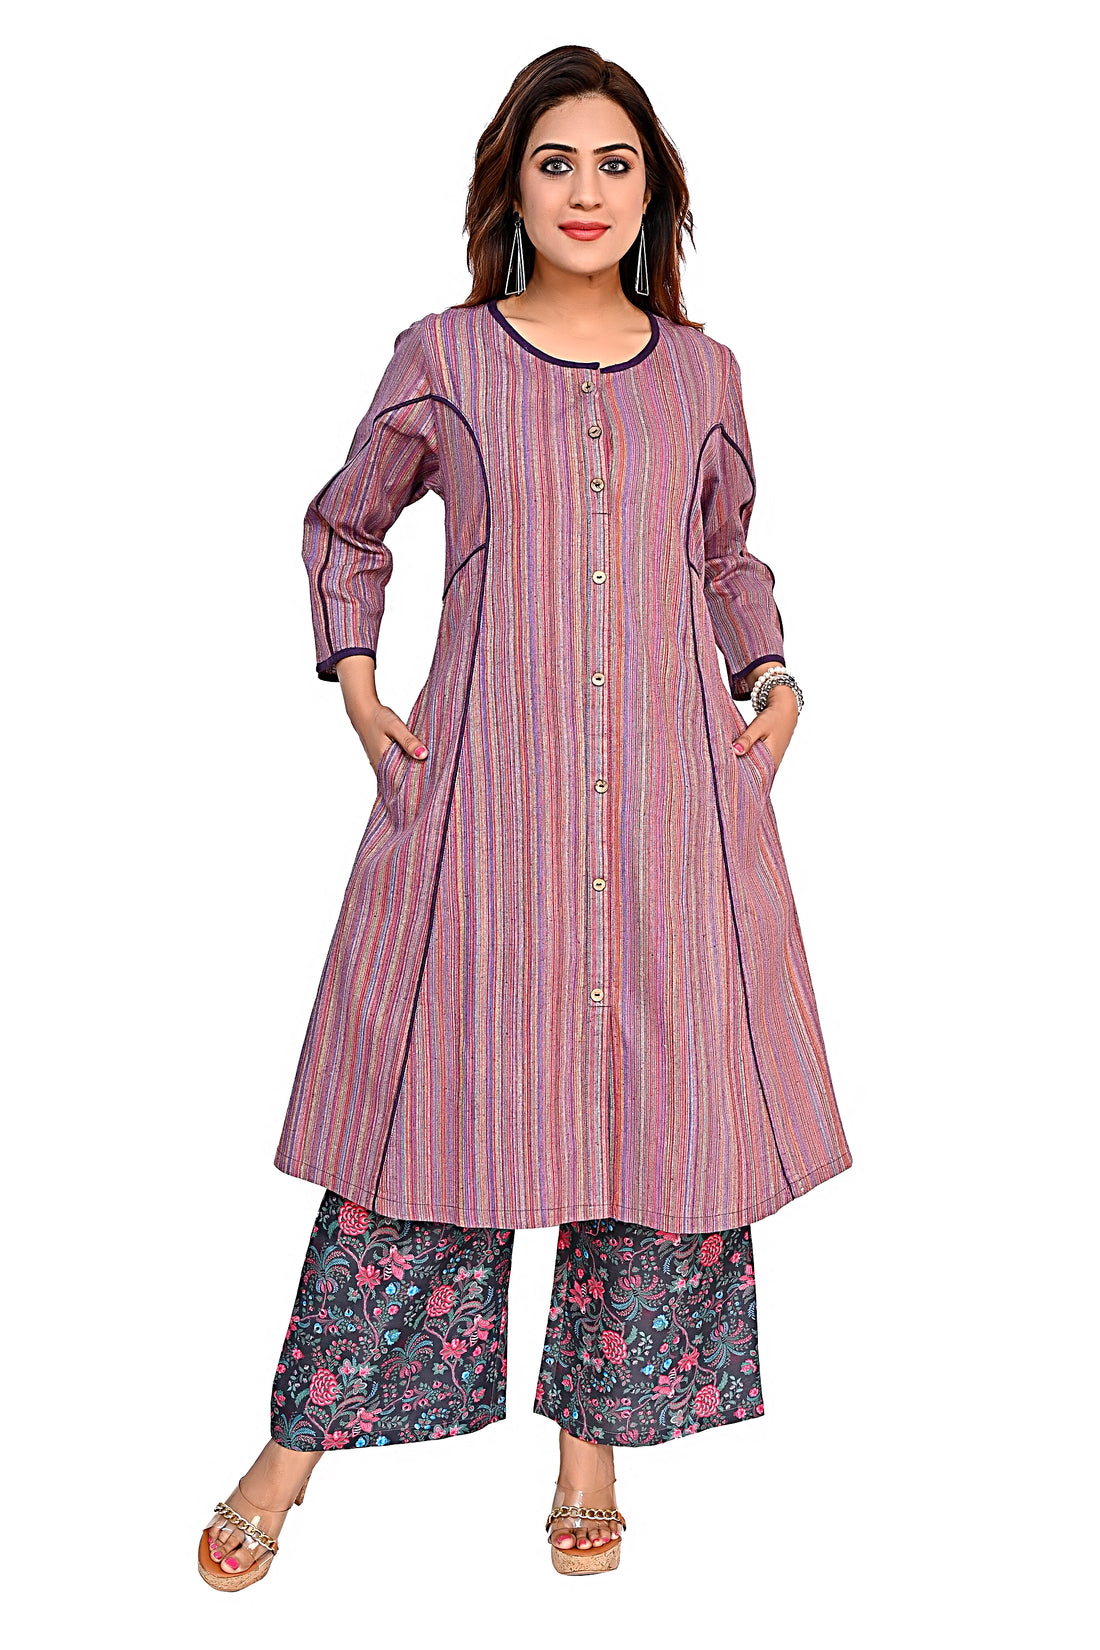 Nirmal Online Premium Cotton co-ord set for Women in Purple Colour Stripe